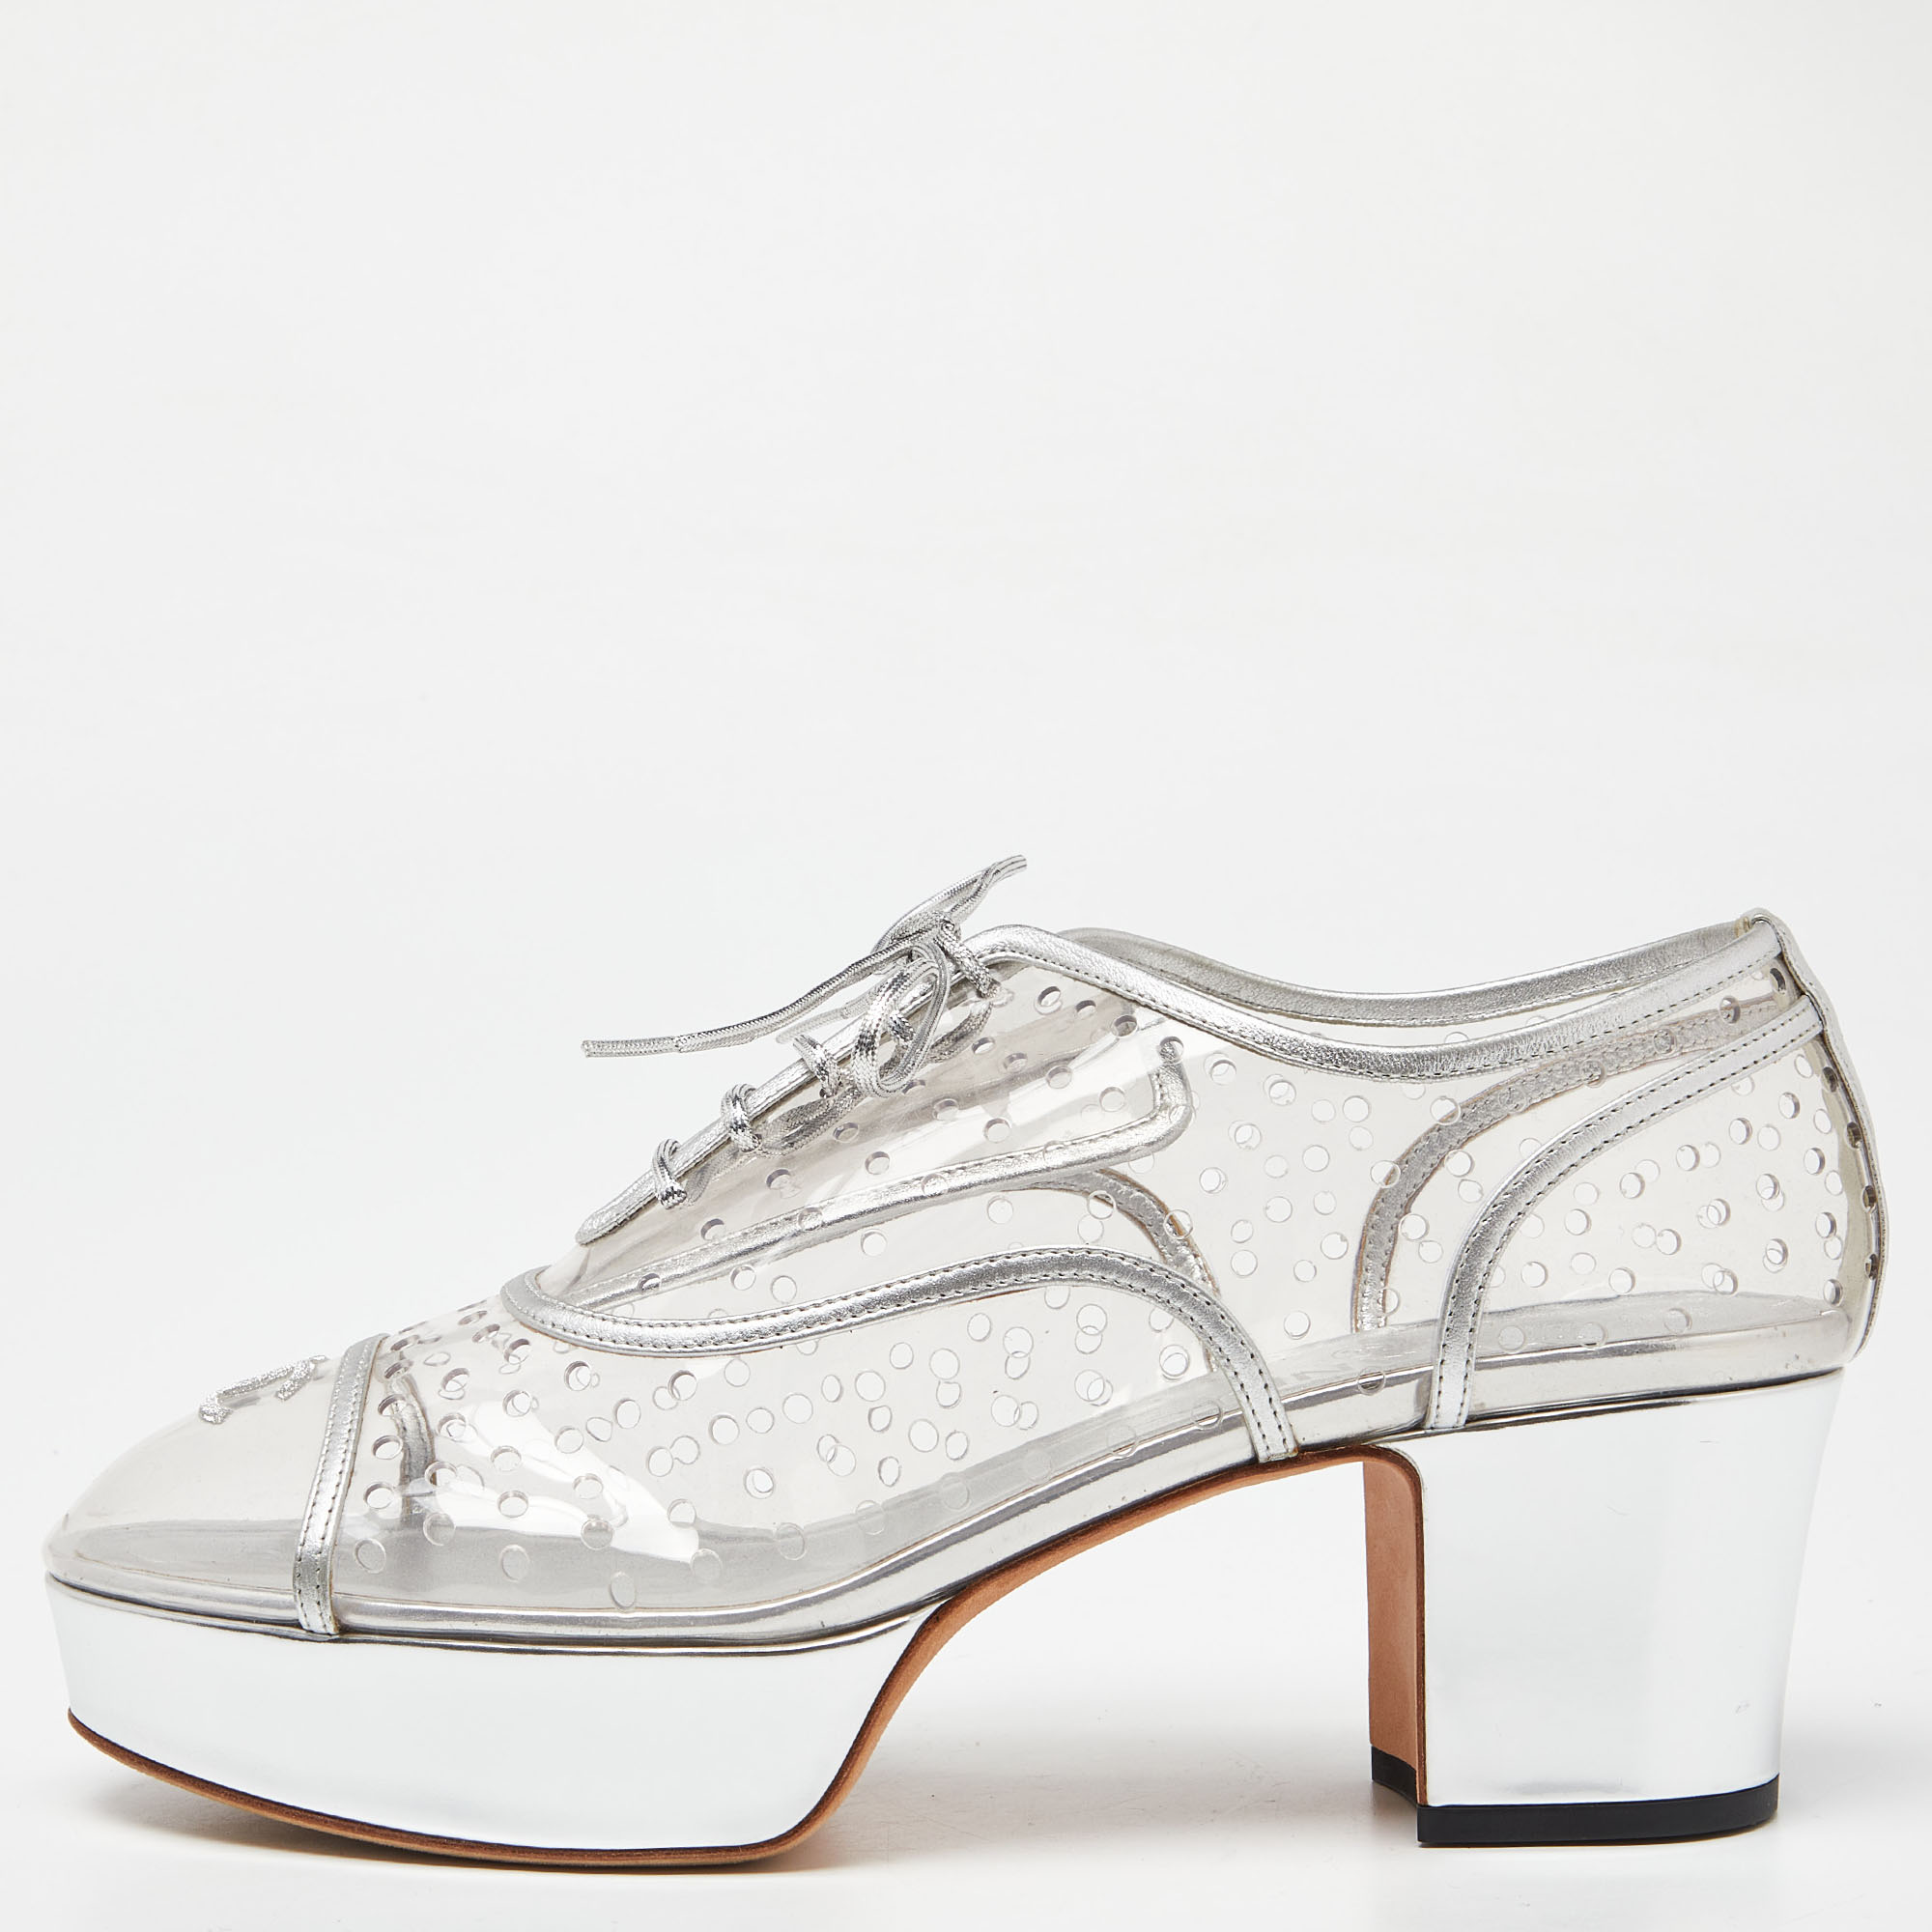 Chanel transparent/silver pvc and leather cc block heel lace up platform pumps size 41